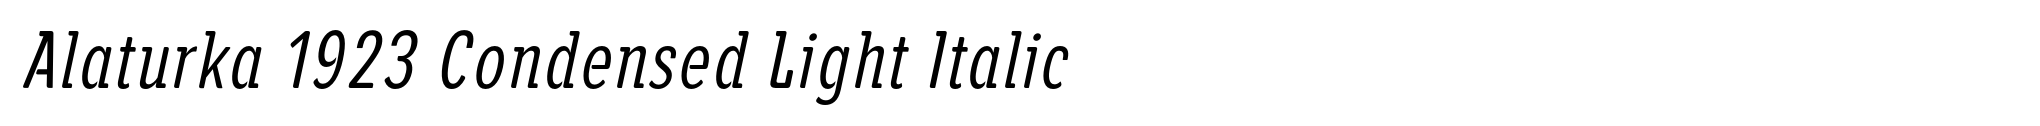 Alaturka 1923 Condensed Light Italic image